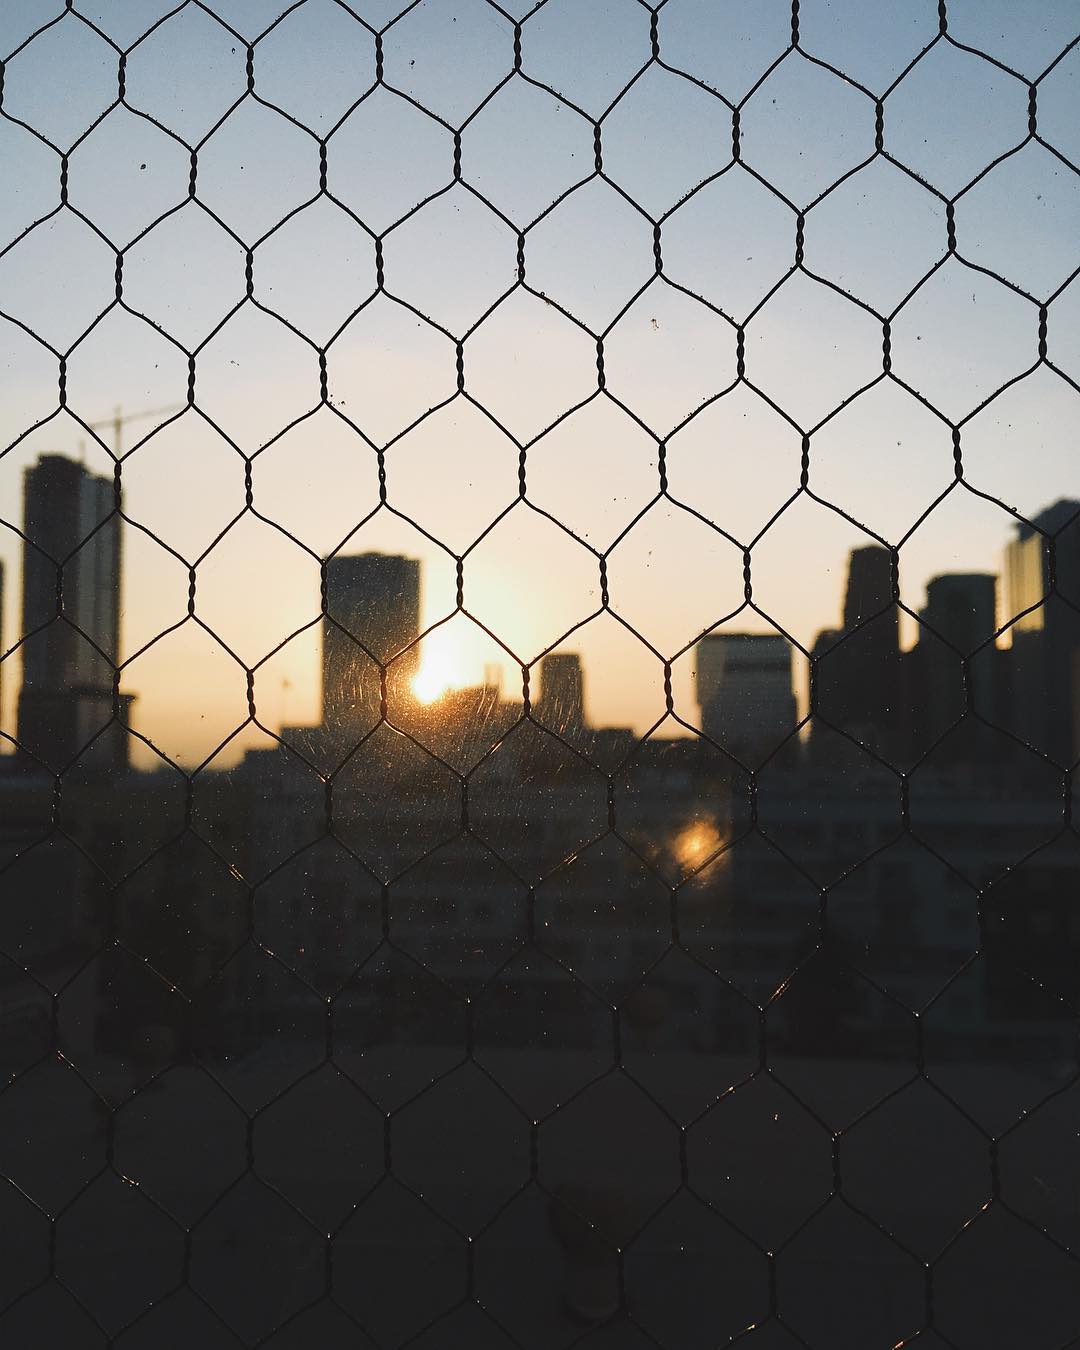 L.A. sunset